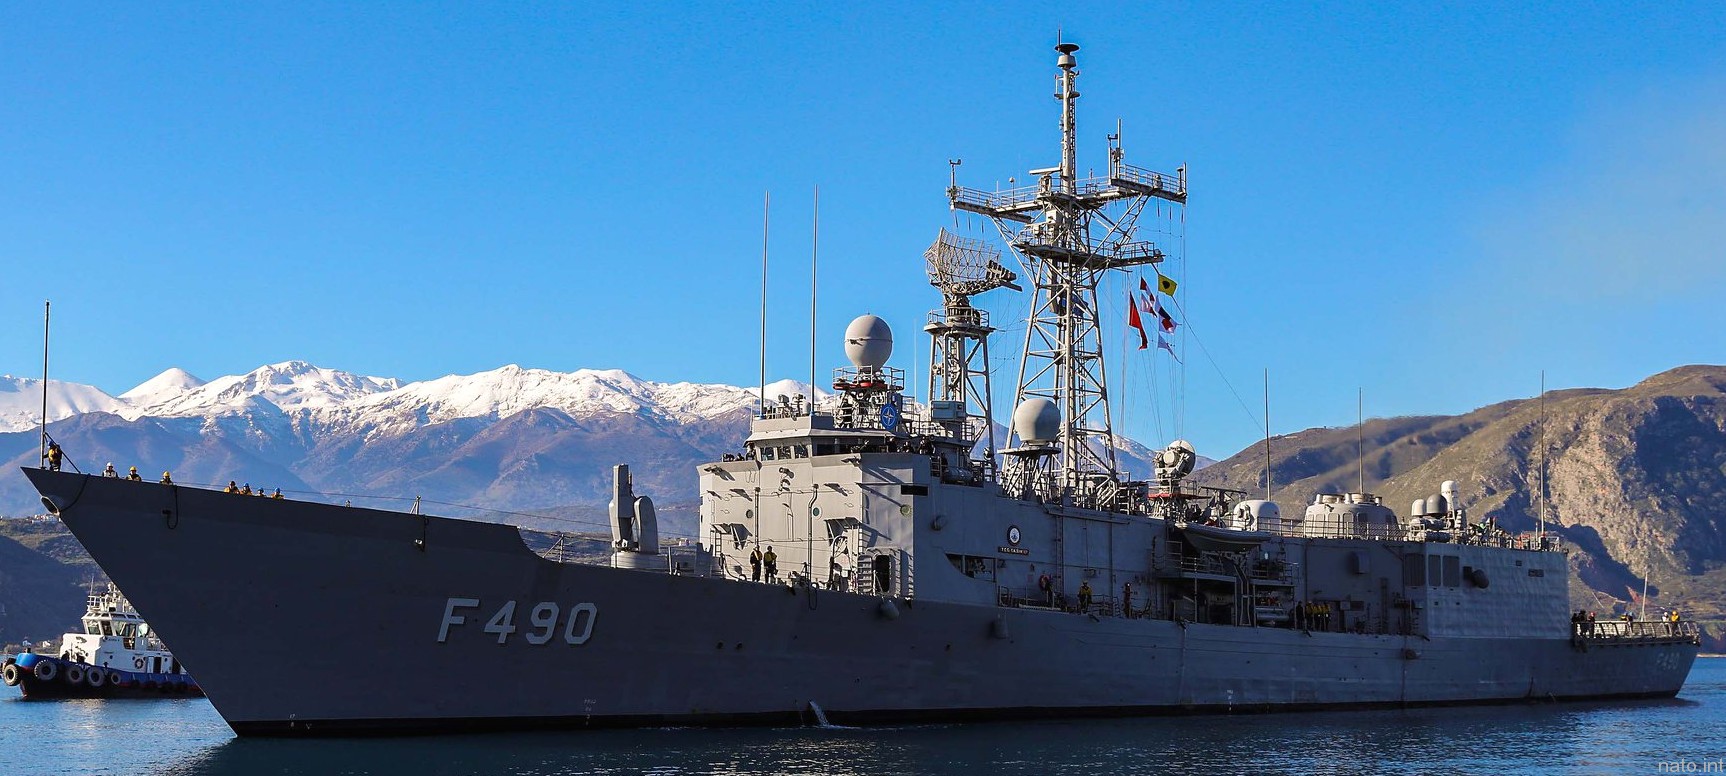 f-490 tcg gaziantep gabya g-class perry frigate ffg turkish navy türk deniz kuvvetleri 06